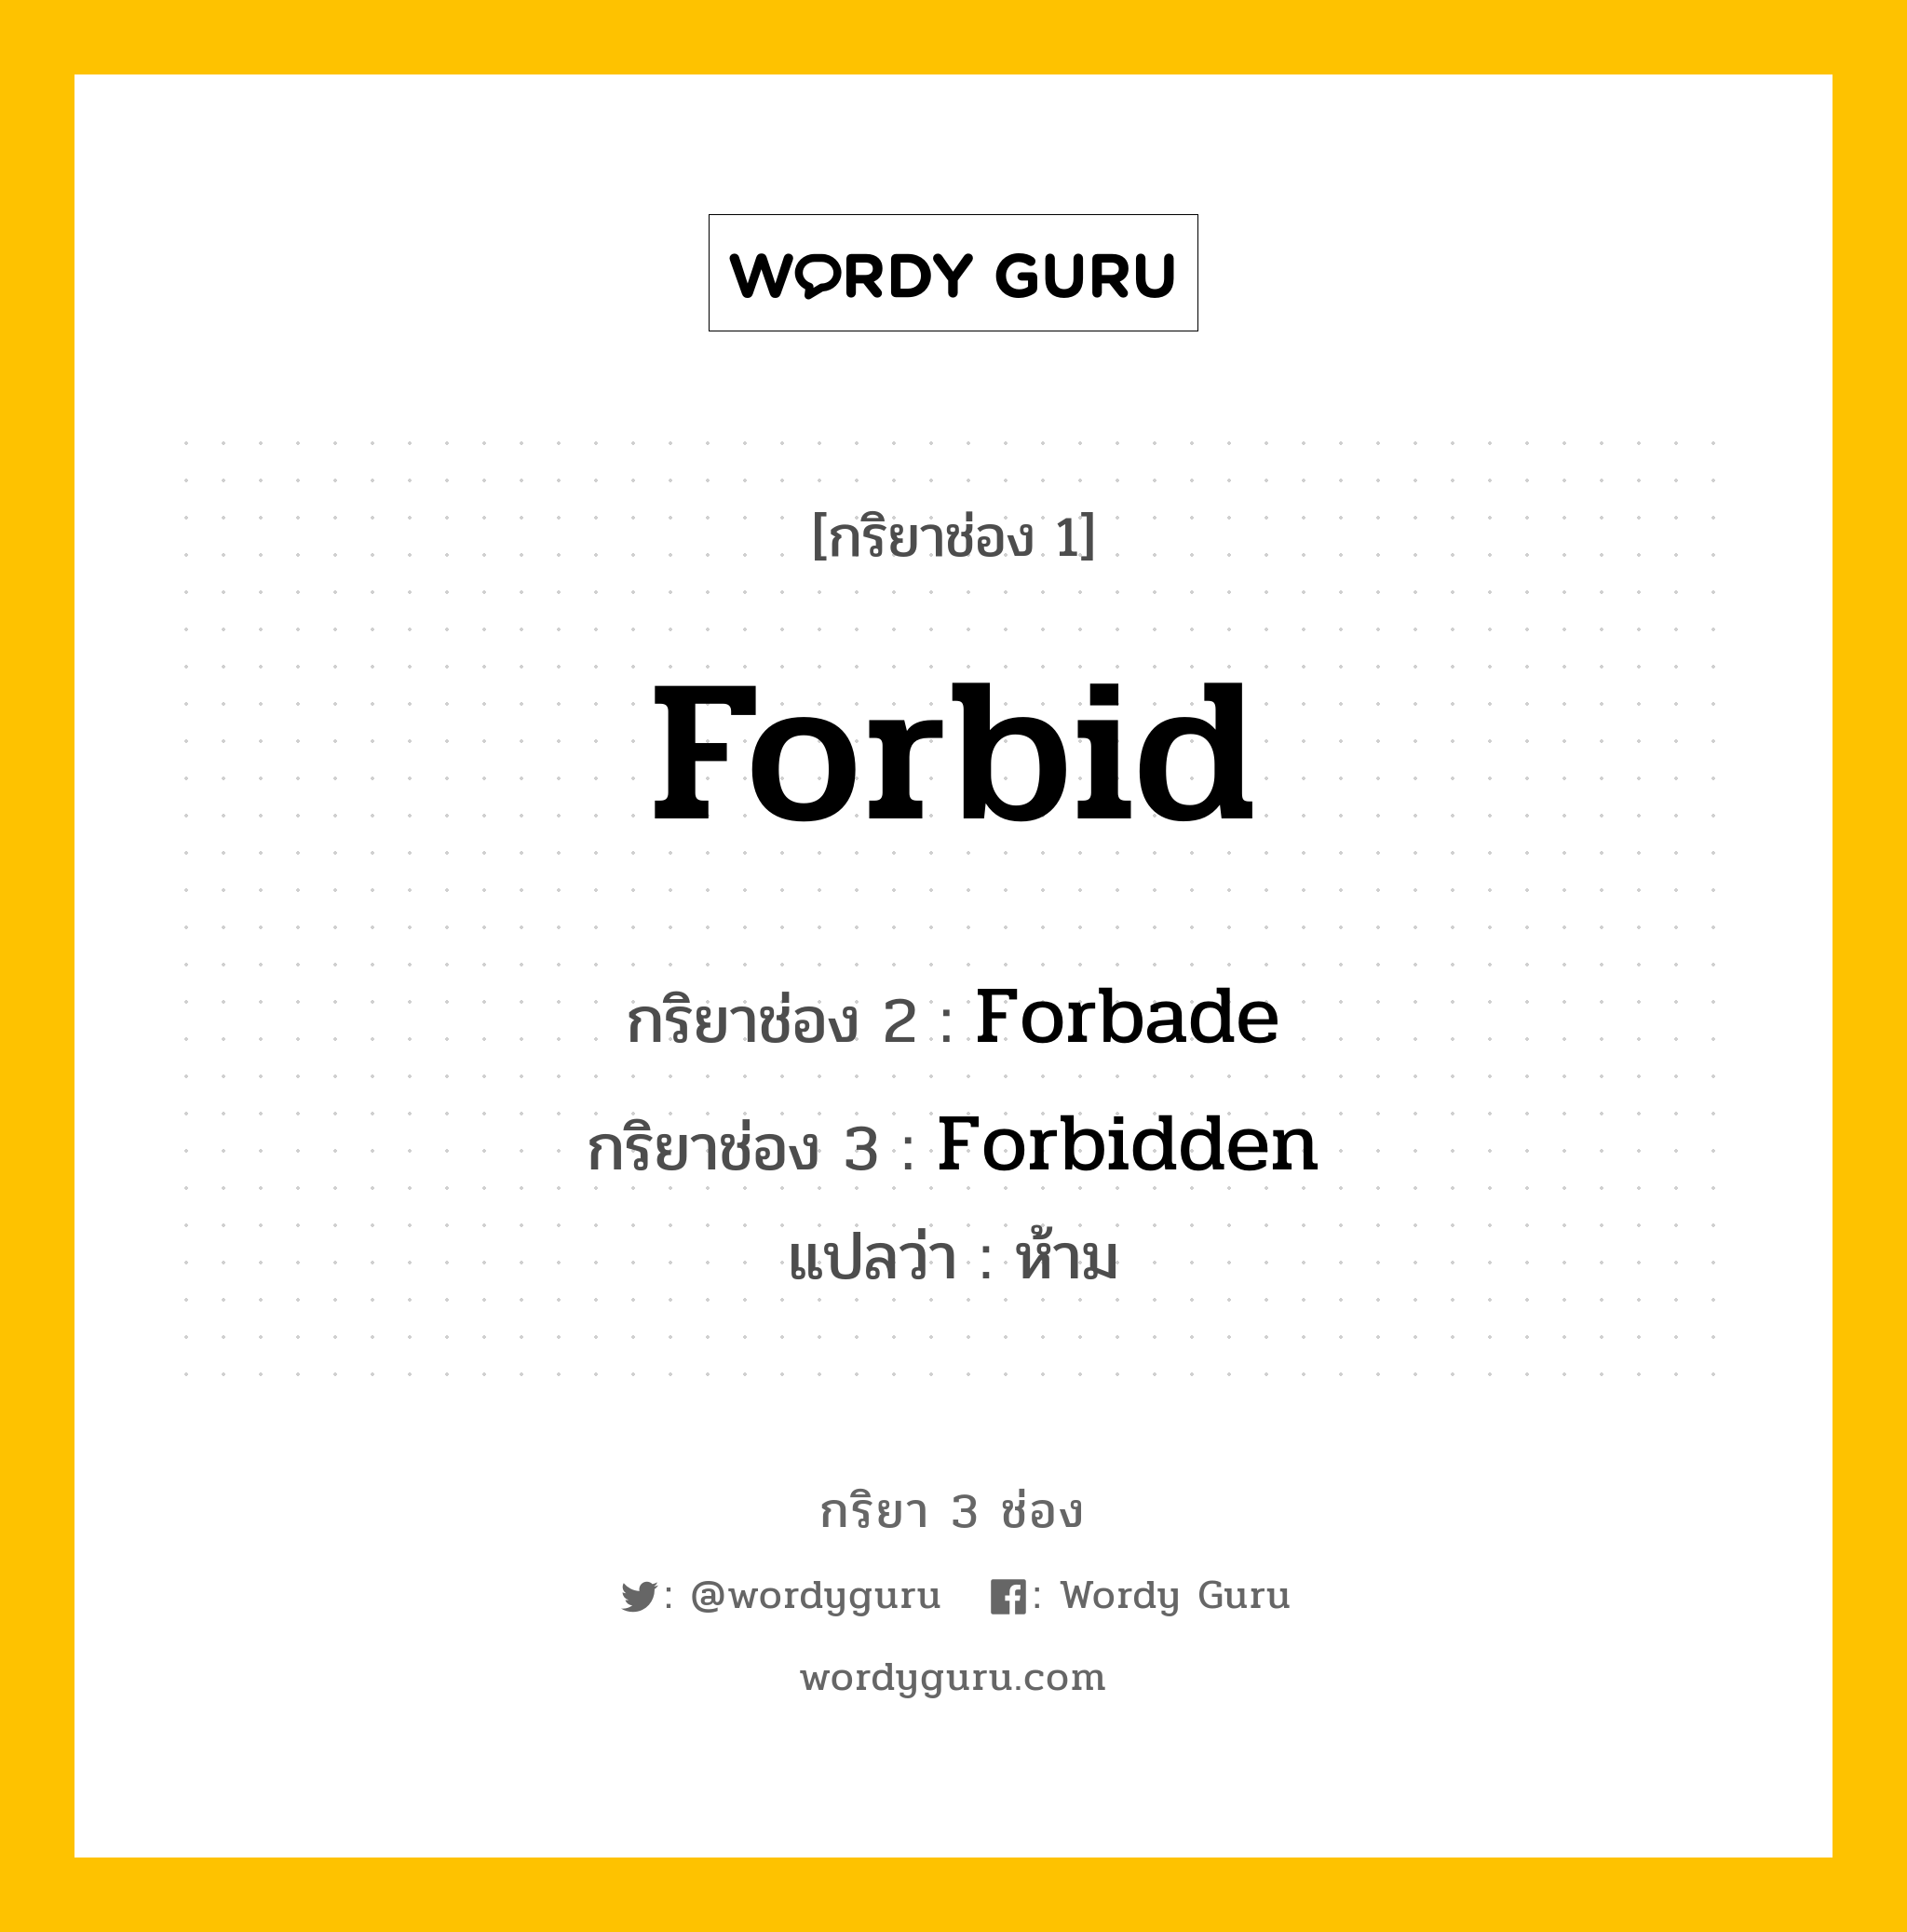 Forbid มีกริยา 3 ช่องอะไรบ้าง? คำศัพท์ในกลุ่มประเภท Irregular Verb, กริยาช่อง 1 Forbid กริยาช่อง 2 Forbade กริยาช่อง 3 Forbidden แปลว่า ห้าม หมวด Irregular Verb